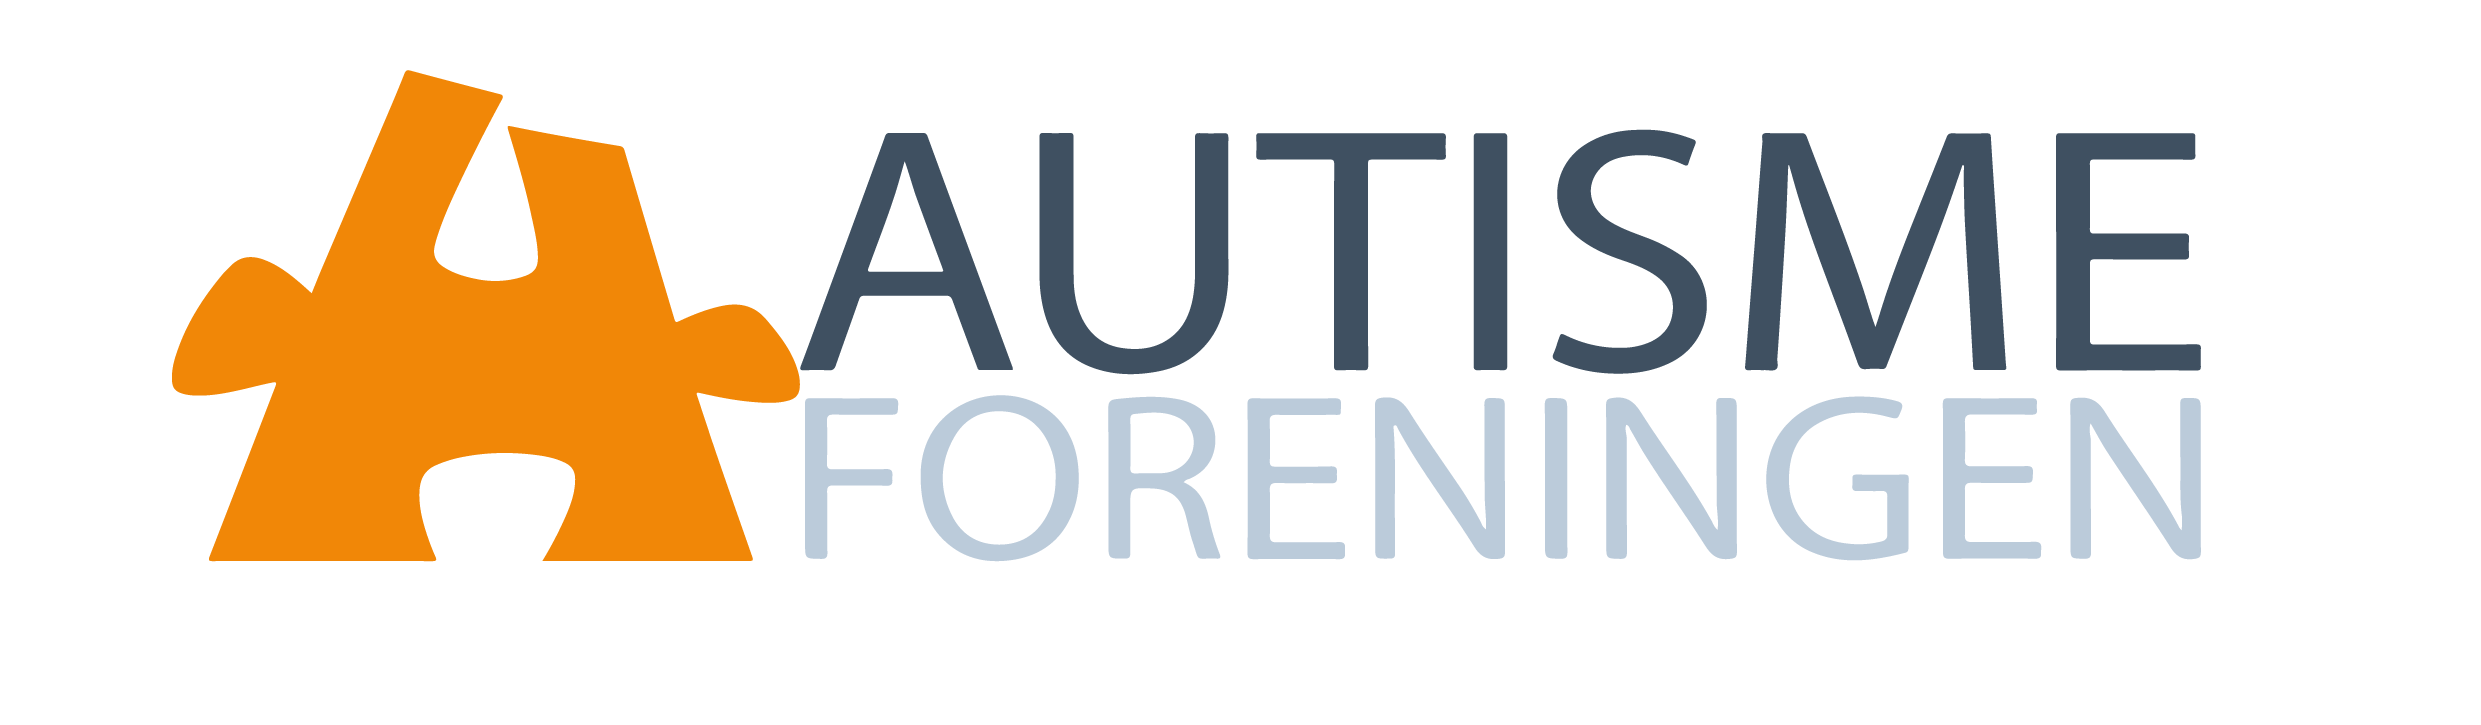 Autismeforeningens logo